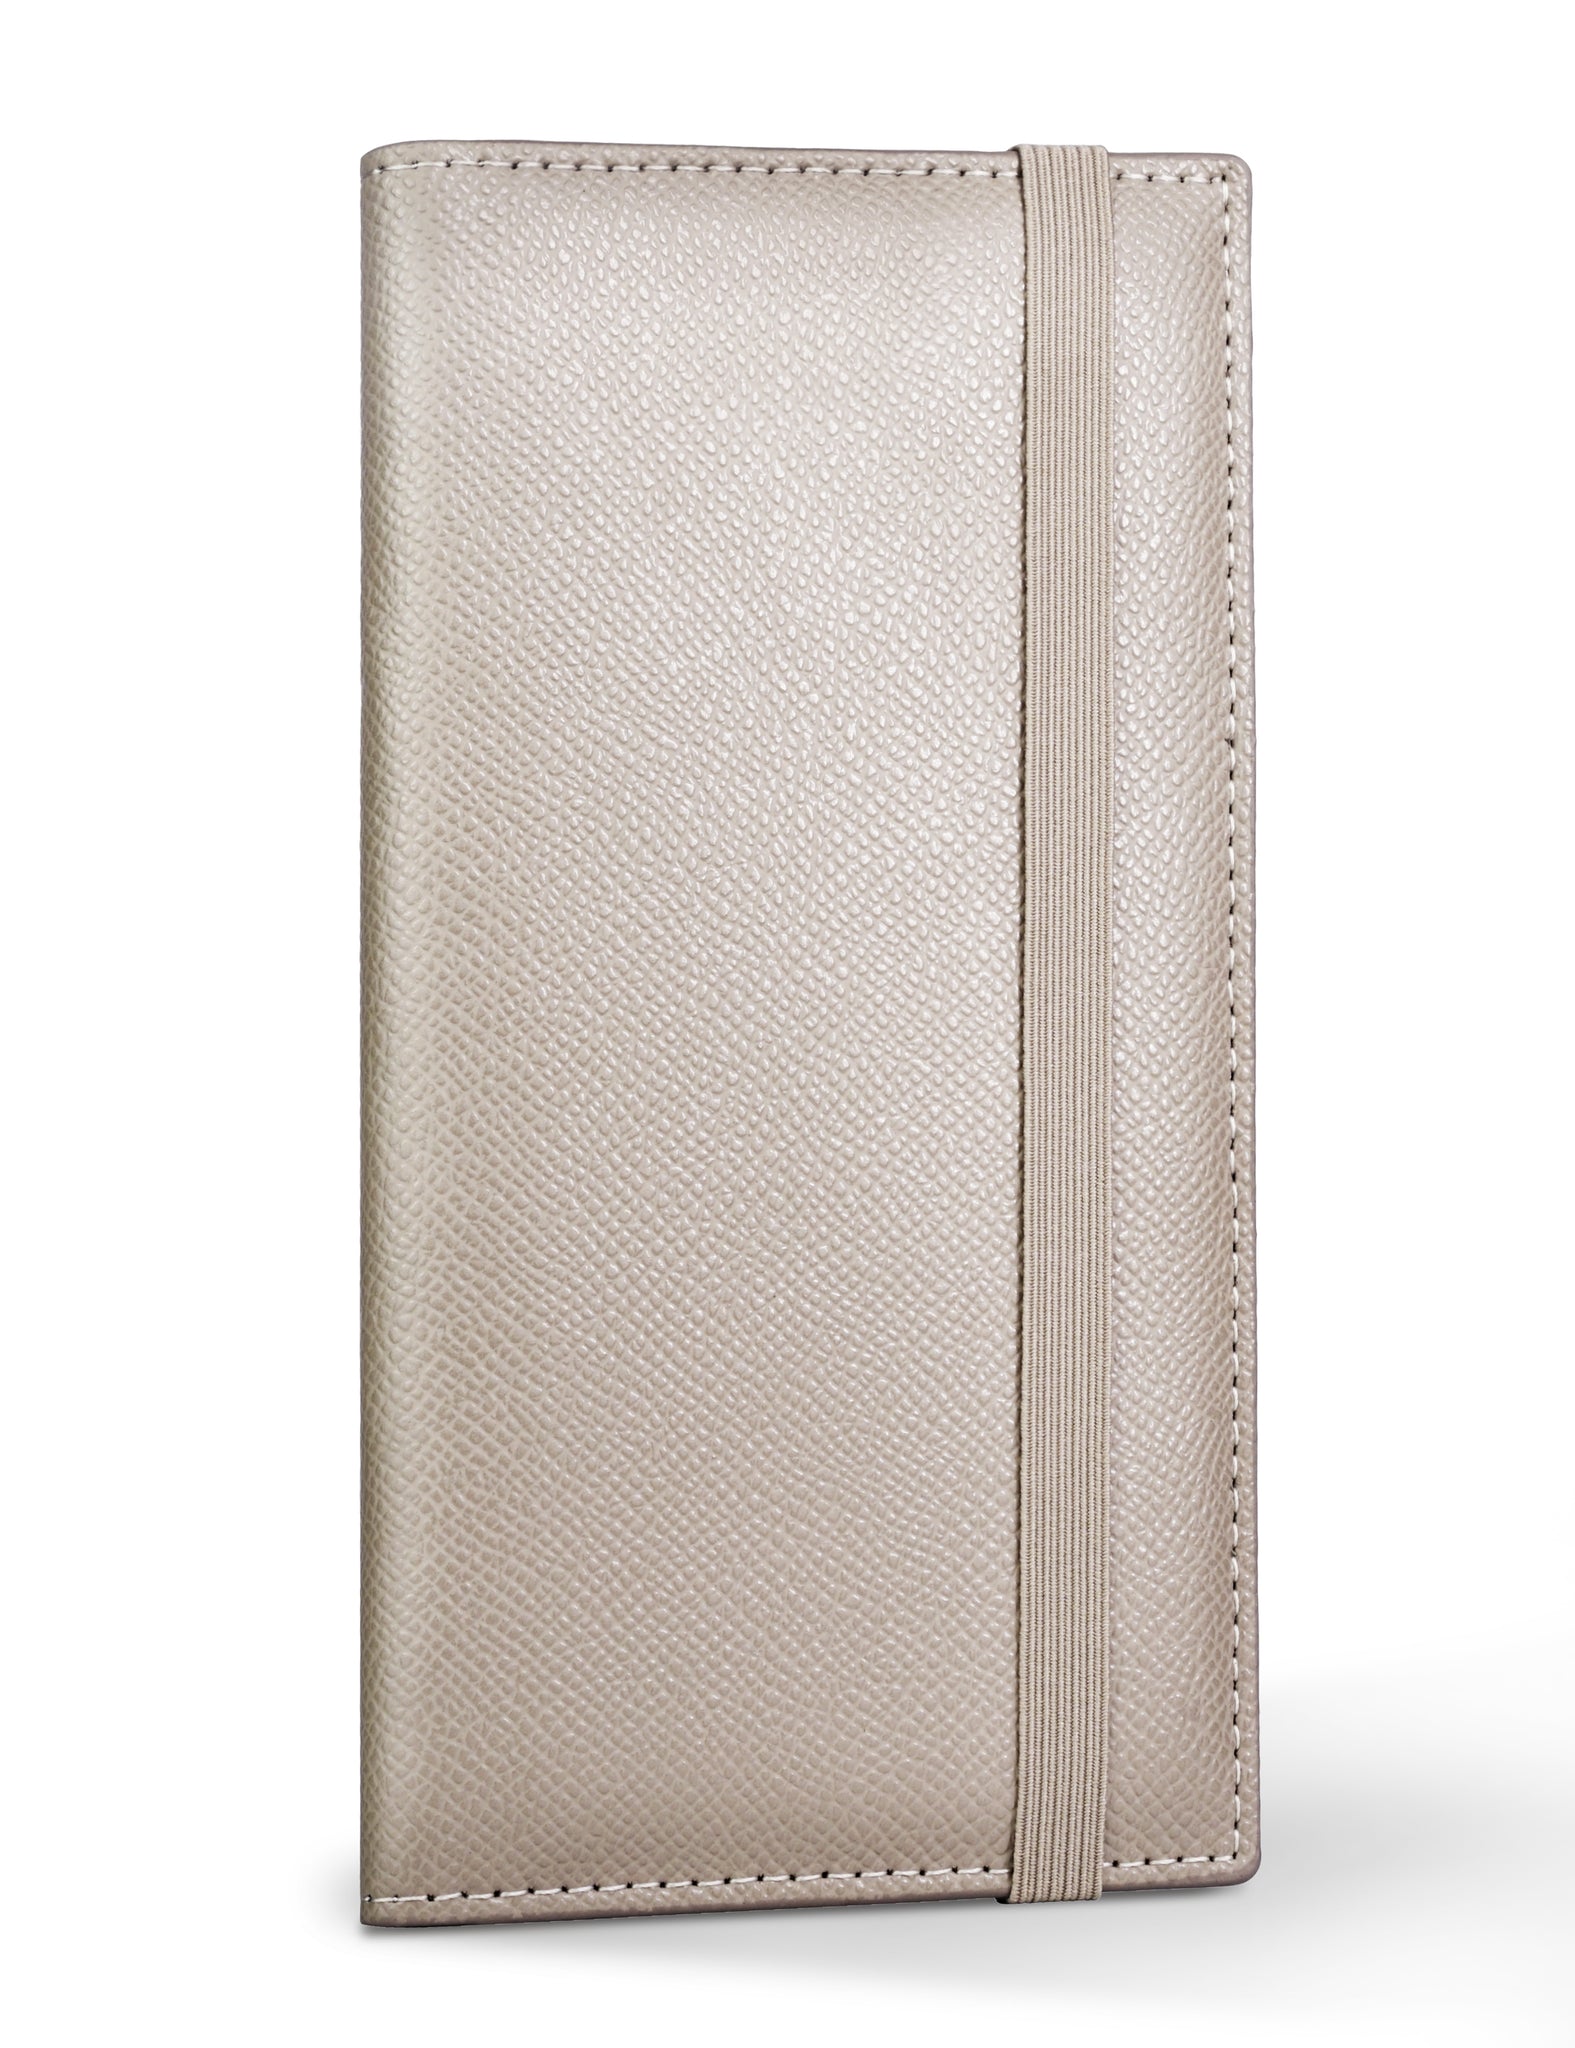 7"x3.7" Sand Vegan Leather Checkbook Cover